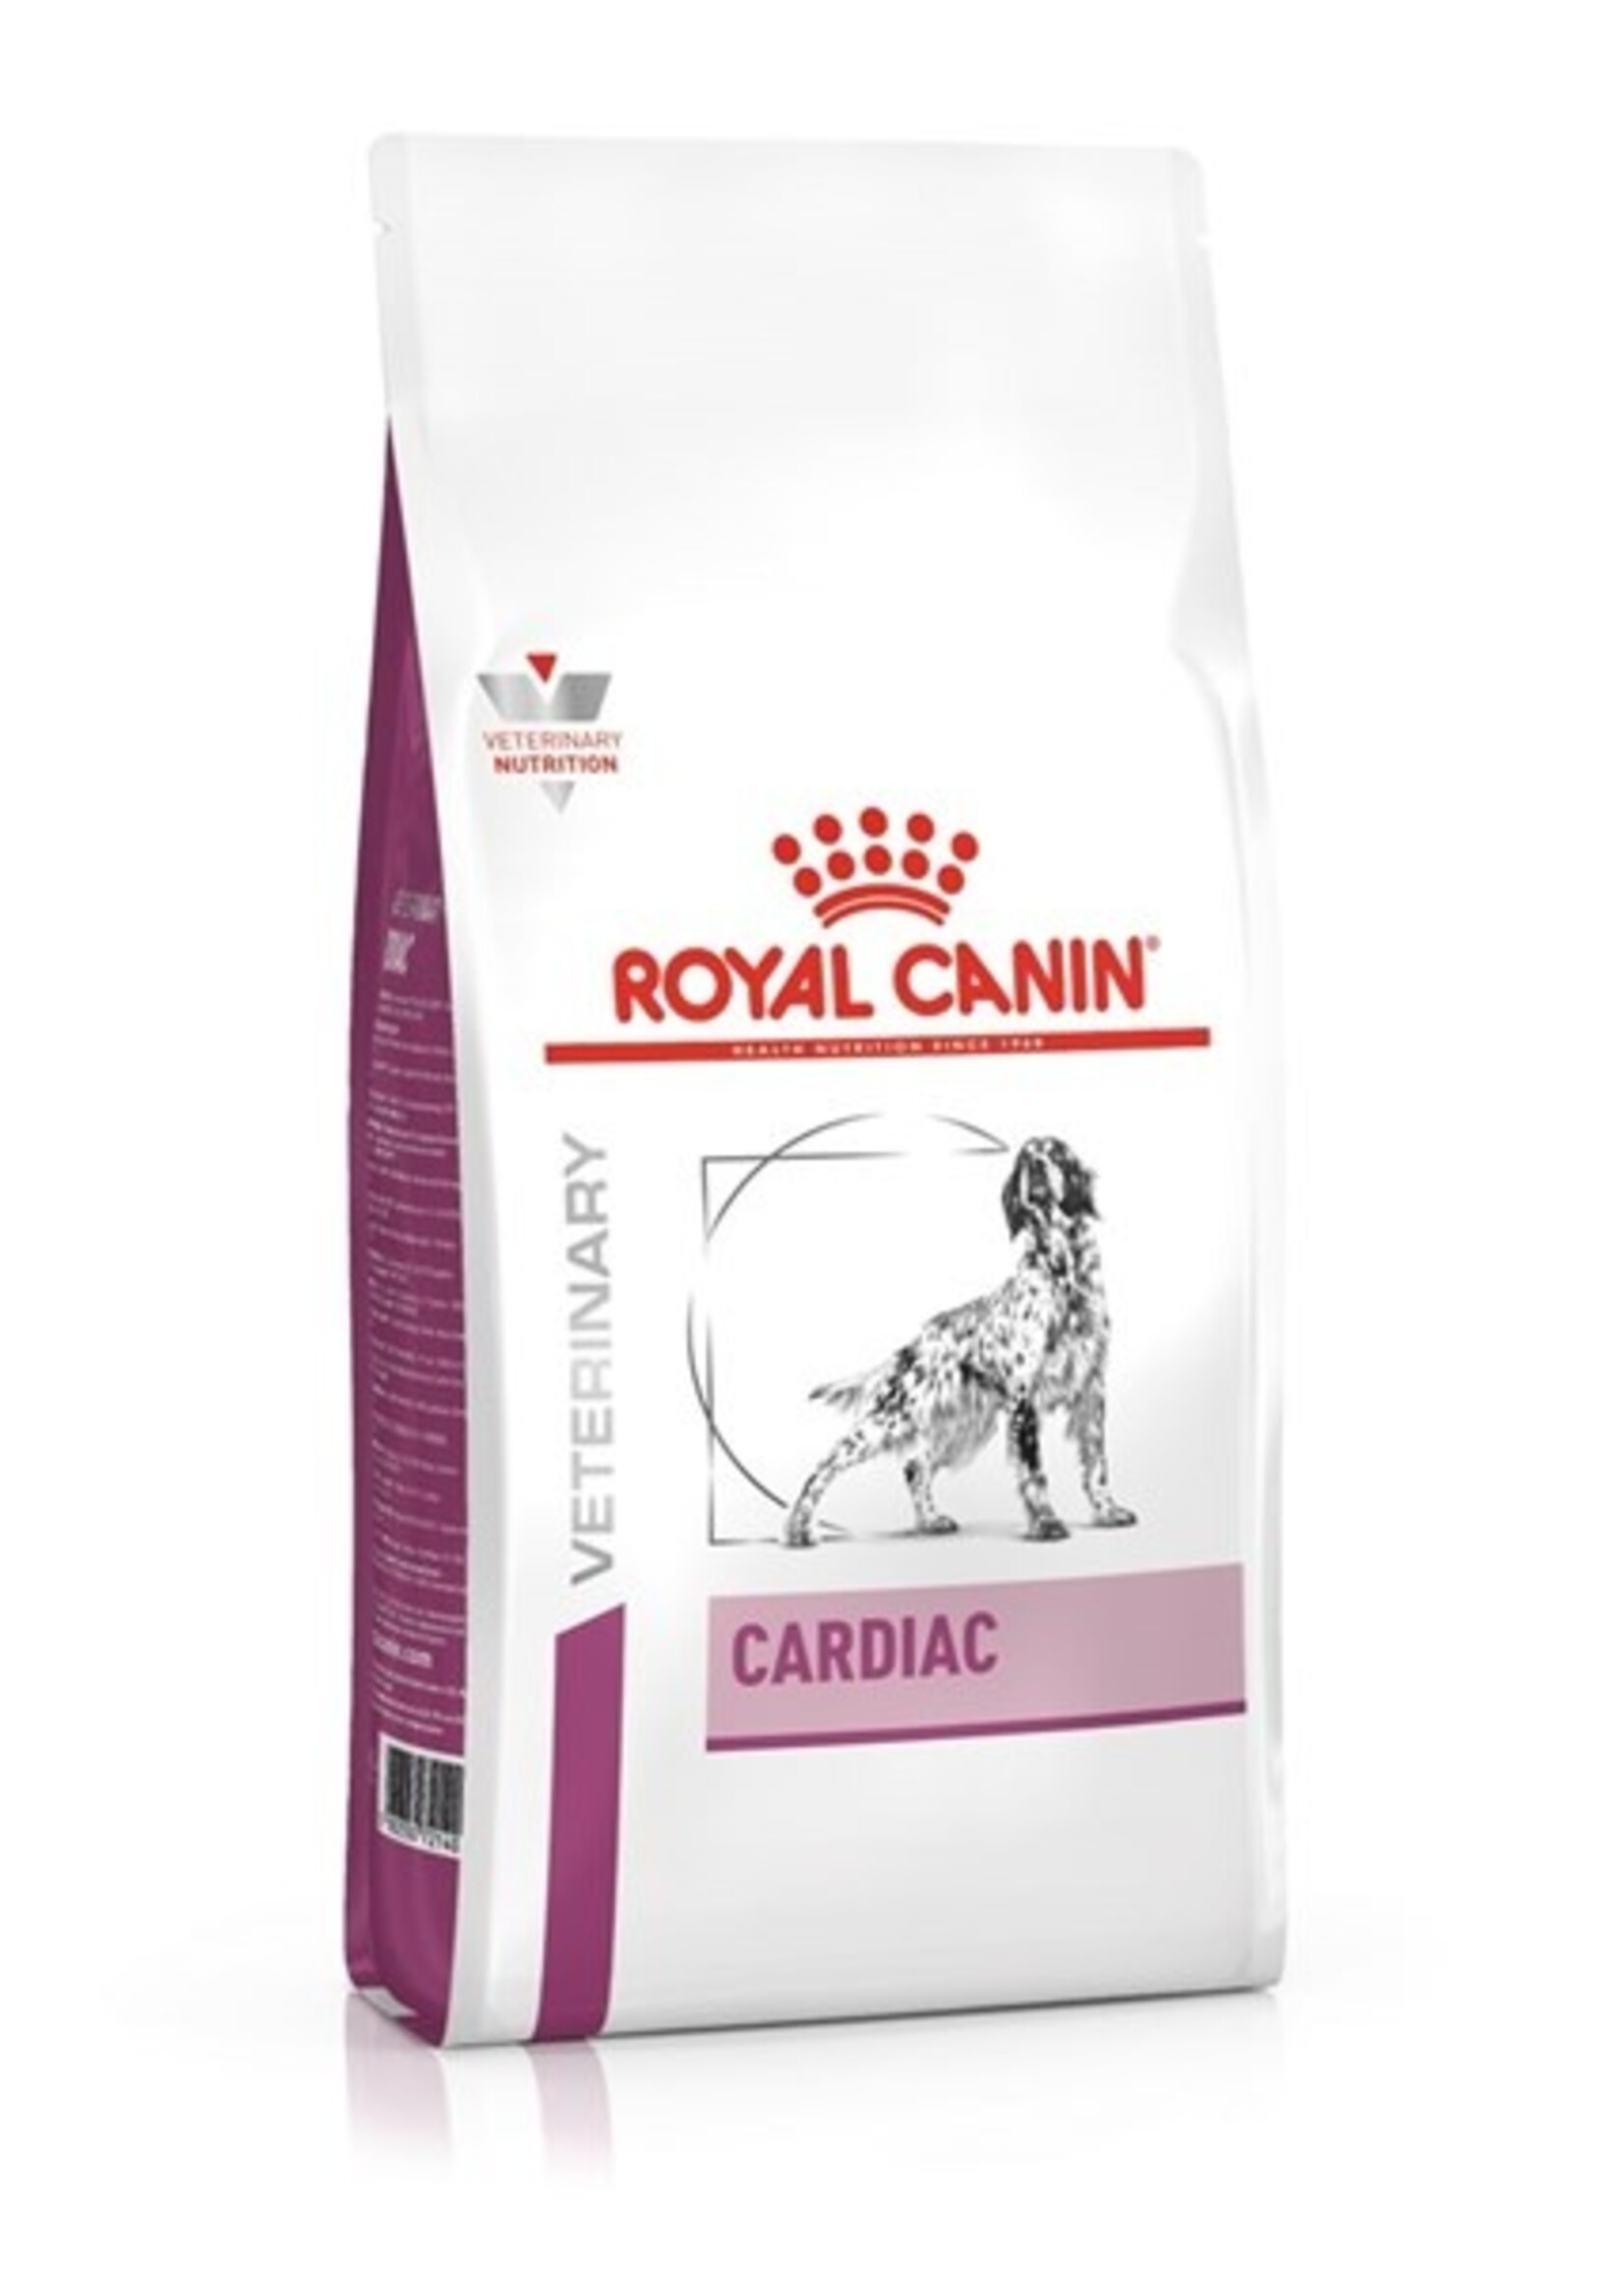 Royal Canin Royal Canin Vdiet Cardiac Dog 14kg